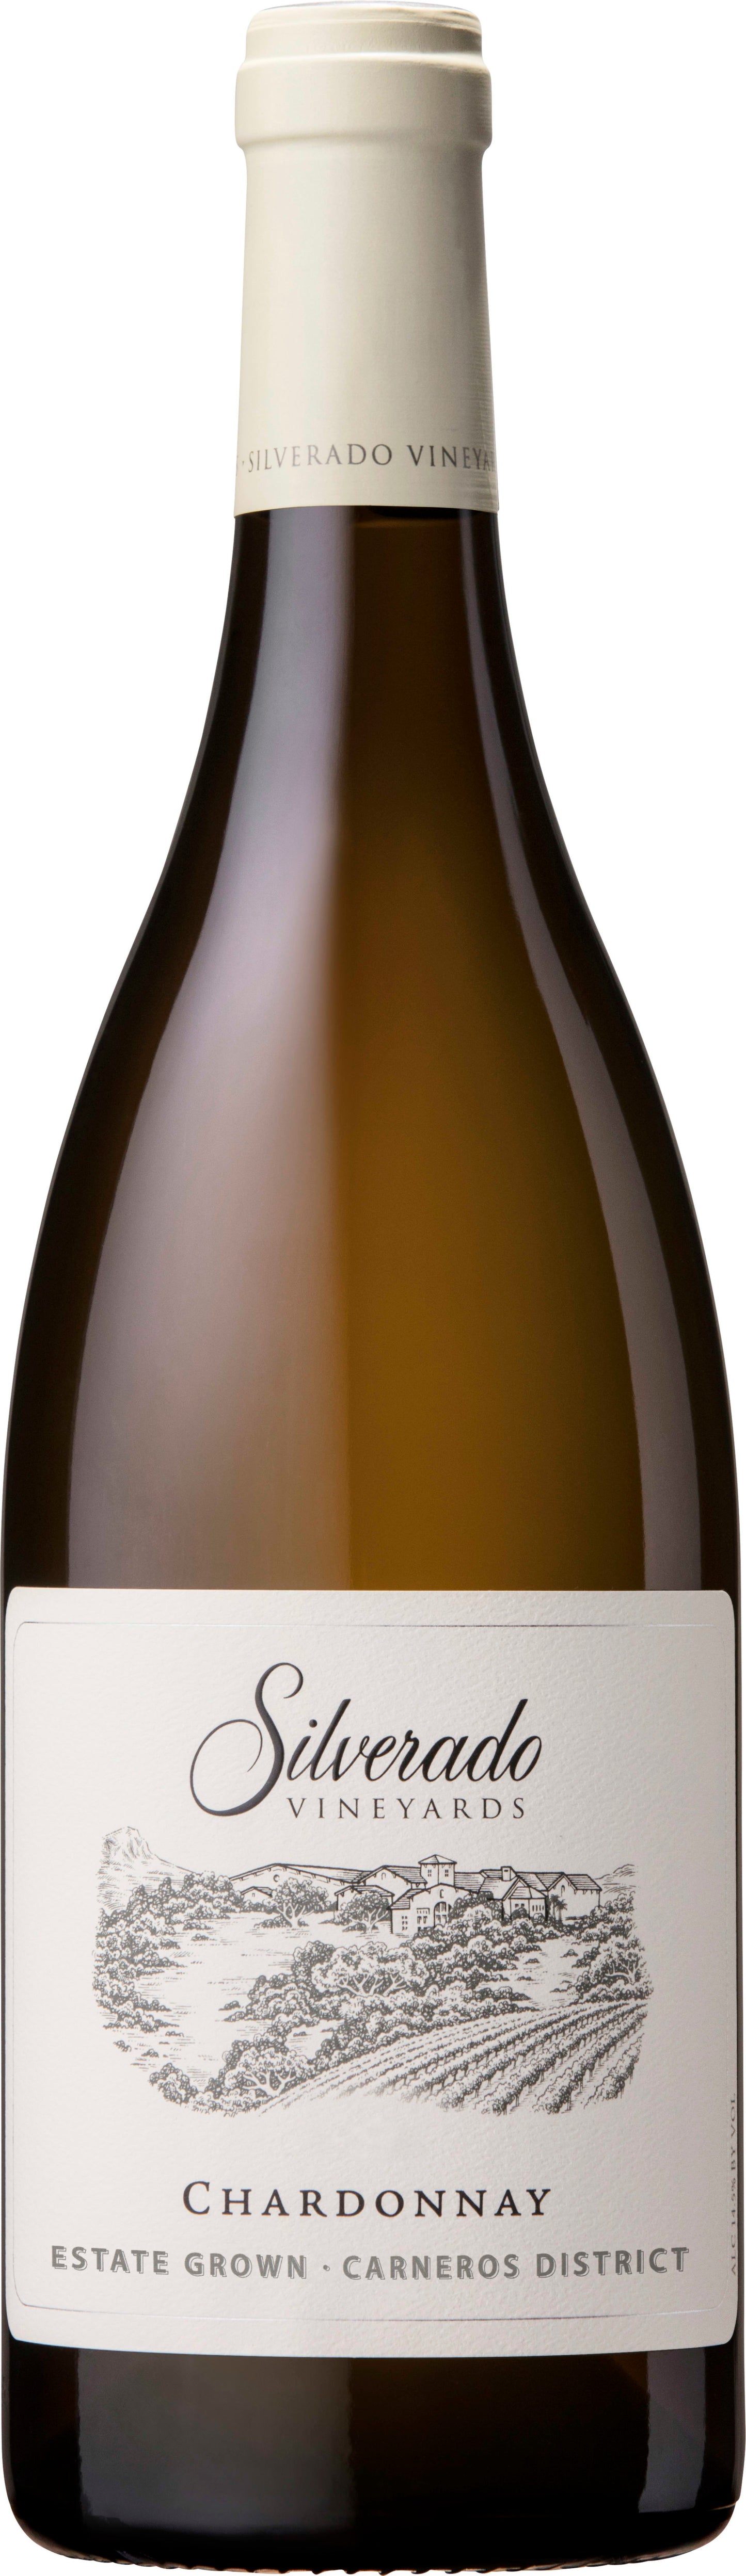 Silverado Vineyards Chardonnay 2019